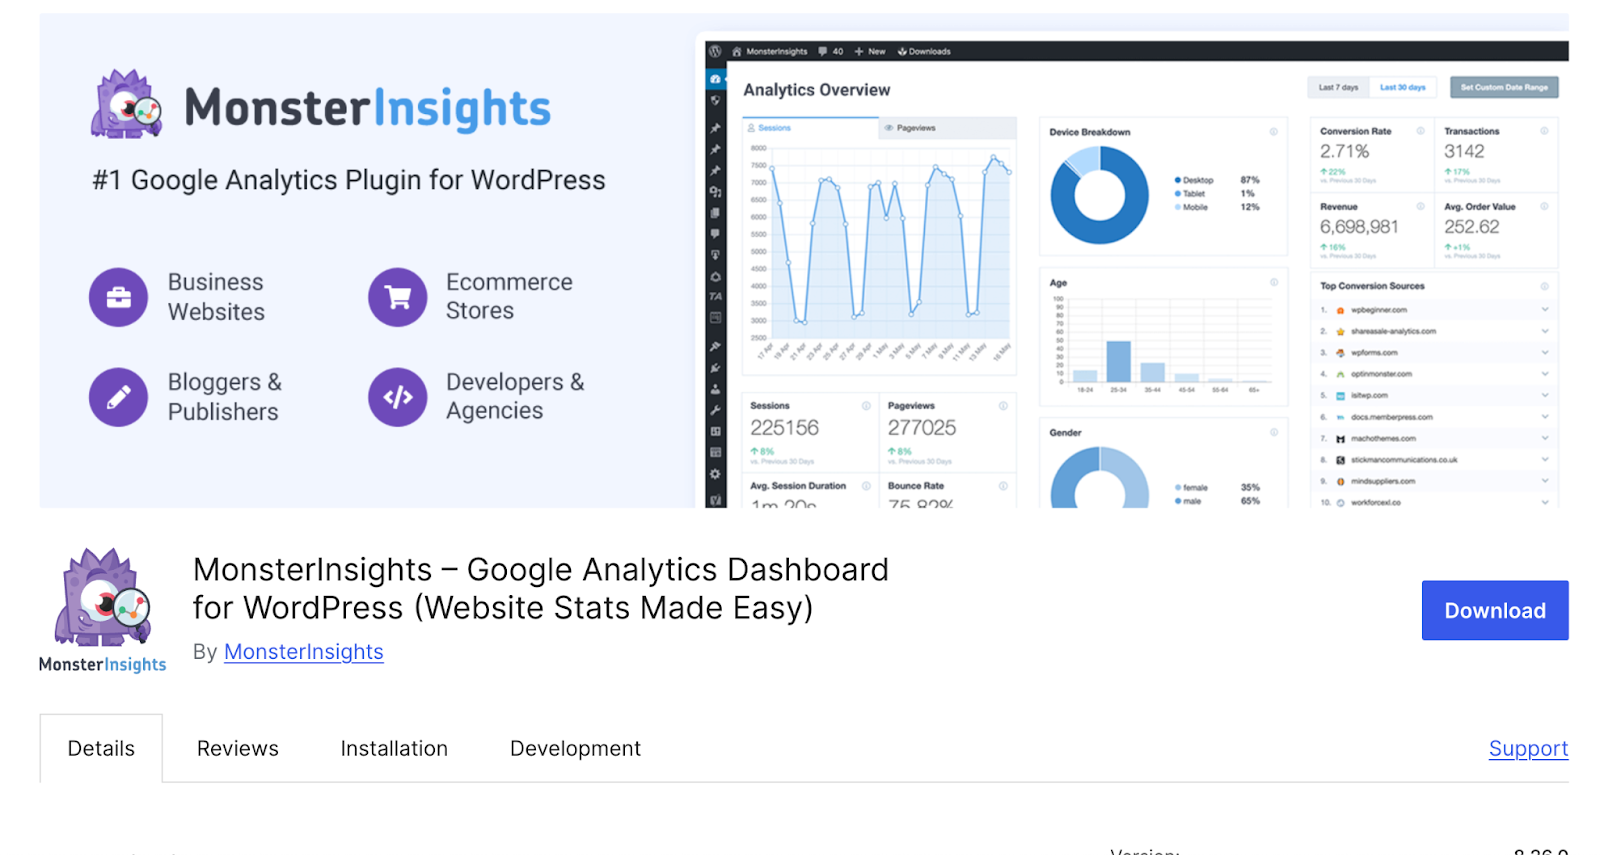 3.MonsterInsights – Google Analytics Dashboard for WordPress